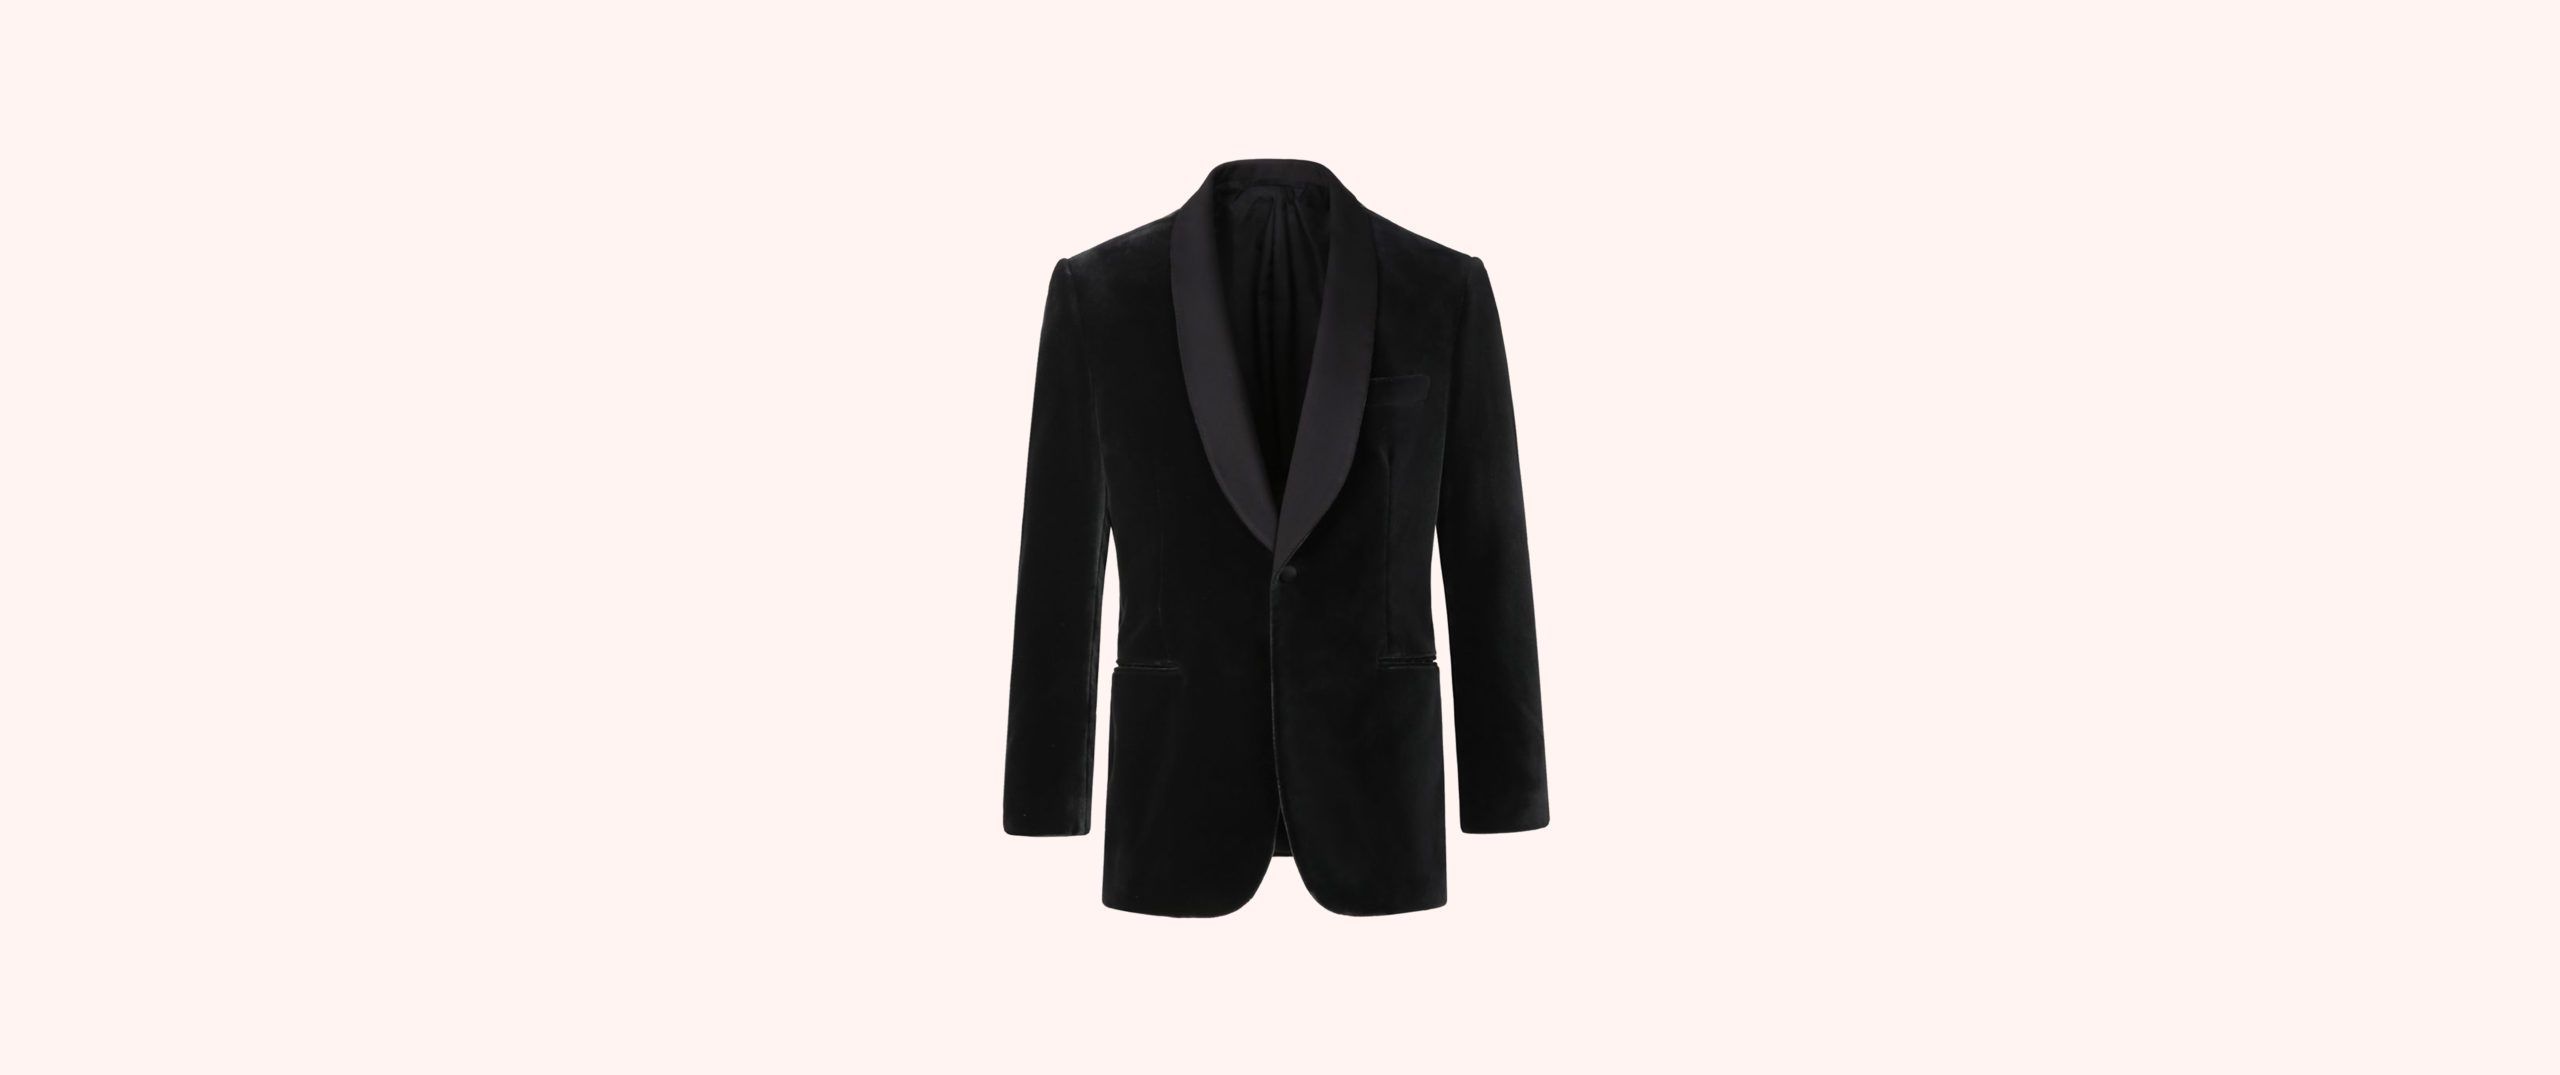 Brioni - Shawl-Collar Silk Satin-Trimmed Virgin Wool Tuxedo Jacket - Black  Brioni